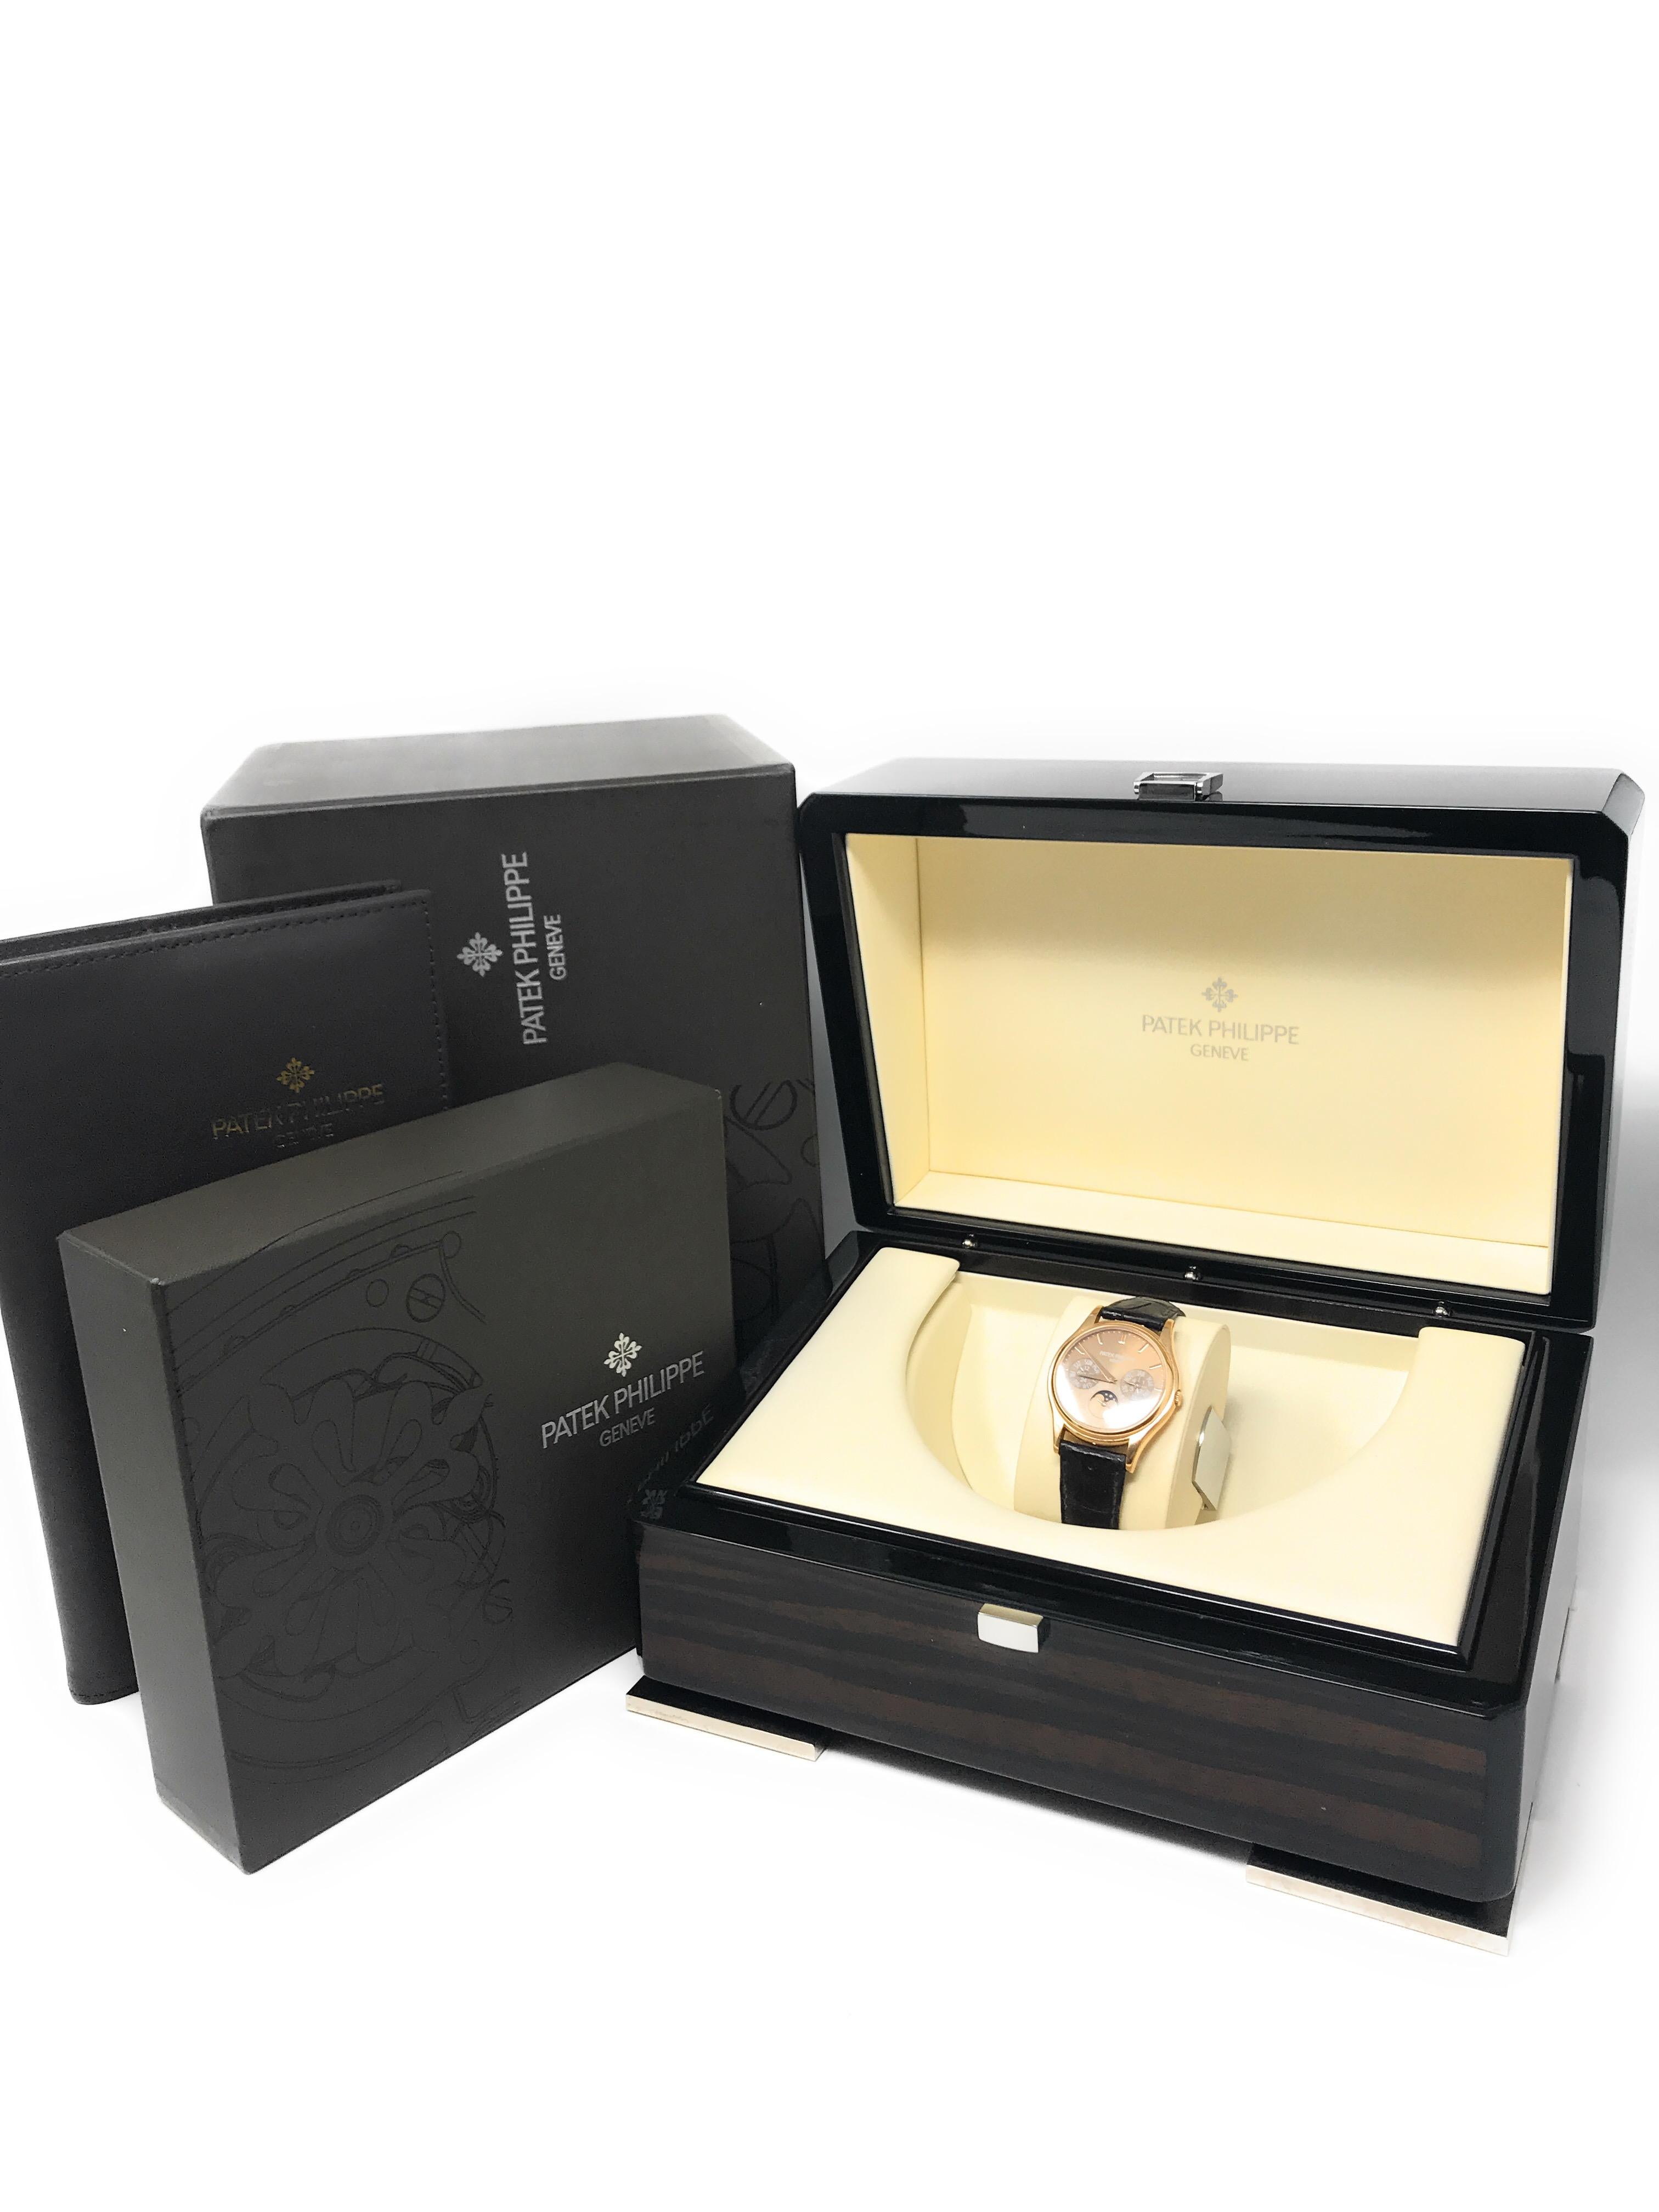 Patek Philippe 5140R Grand Complications Perpetual Calendar Watch For Sale 2